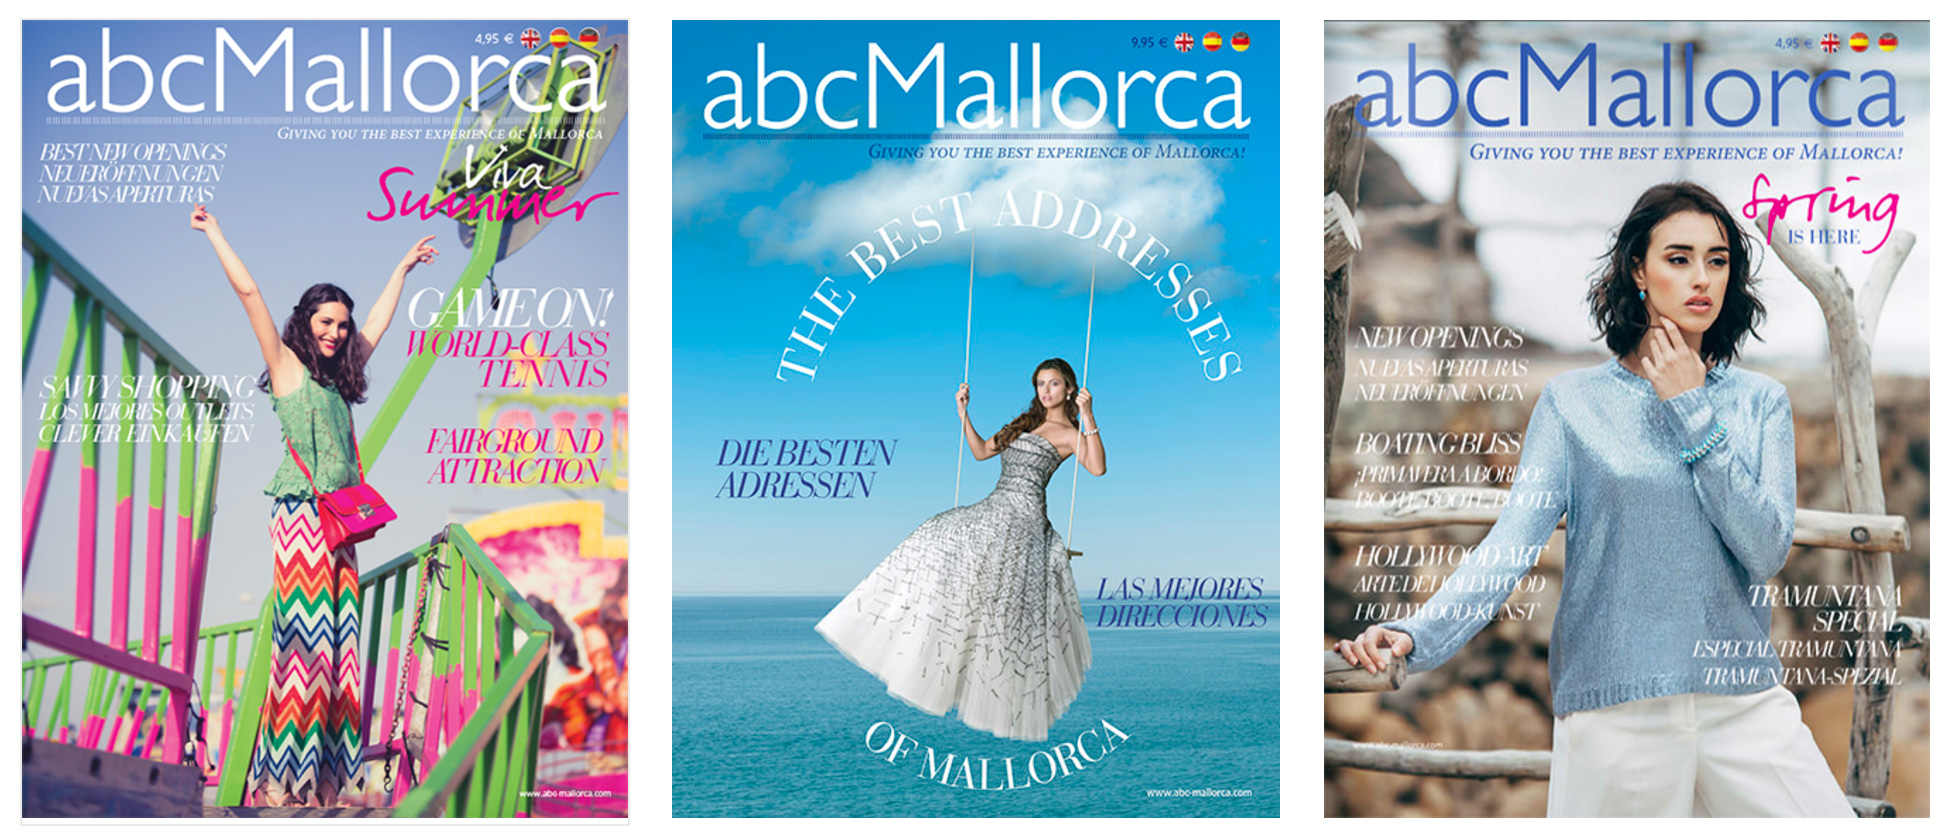 abcmallorca-magazine-covers